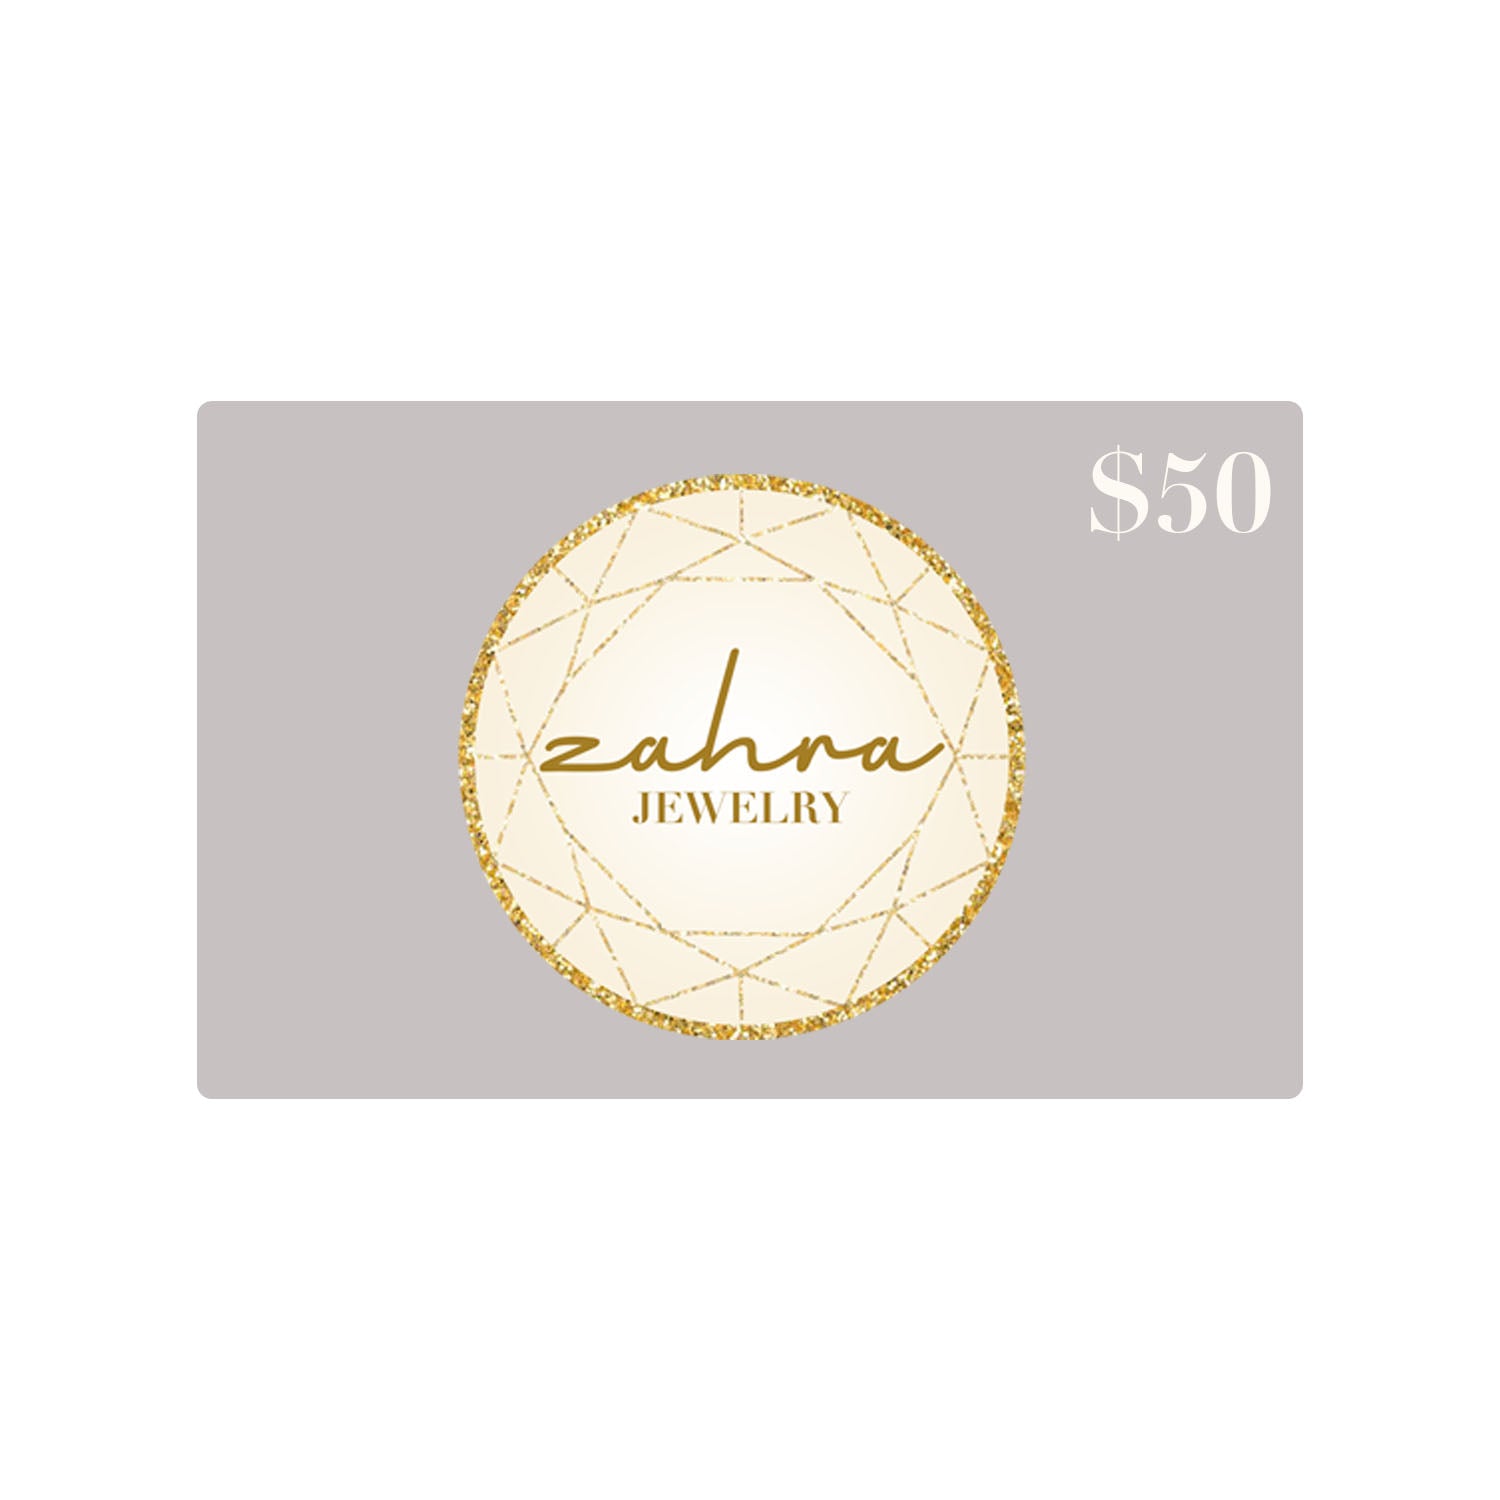 Zahra Jewelry Gift Card - Zahra Jewelry